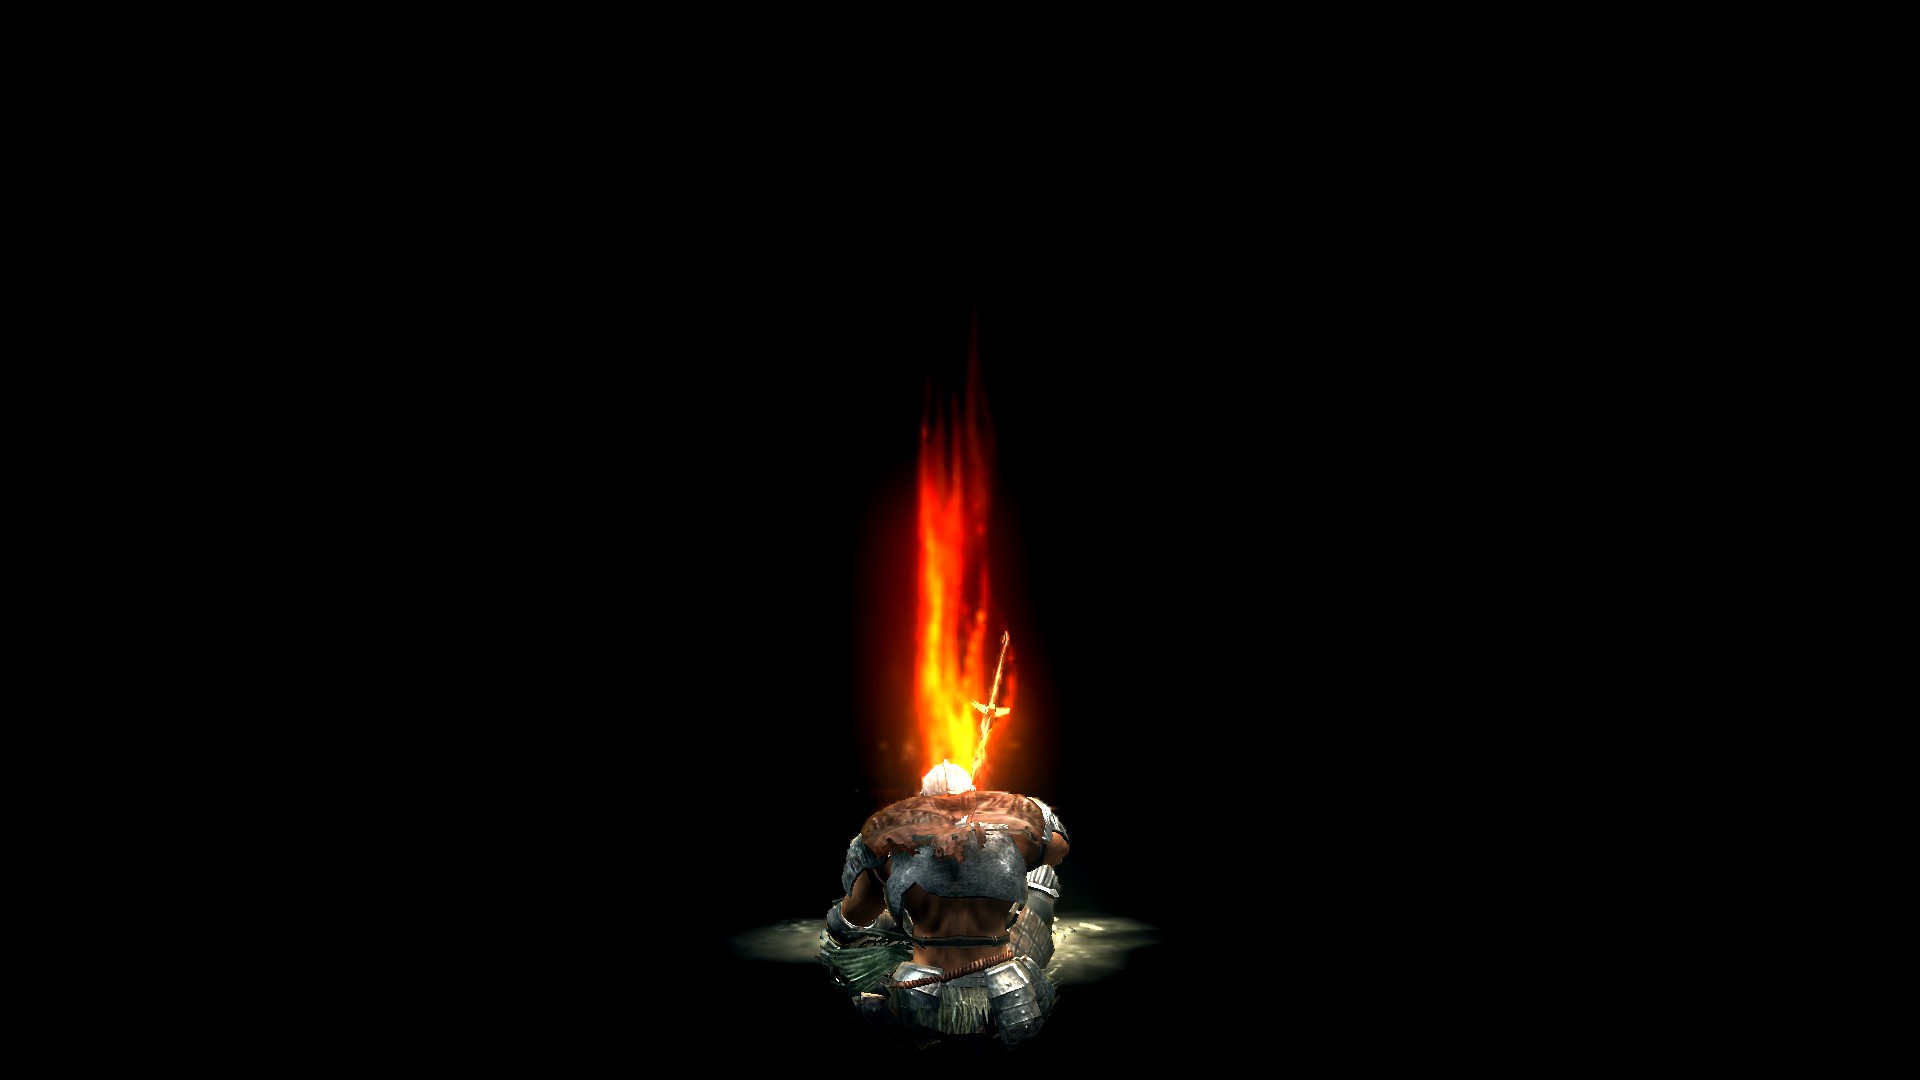 Dark Souls Wallpaper Bonfire Pixshark Image